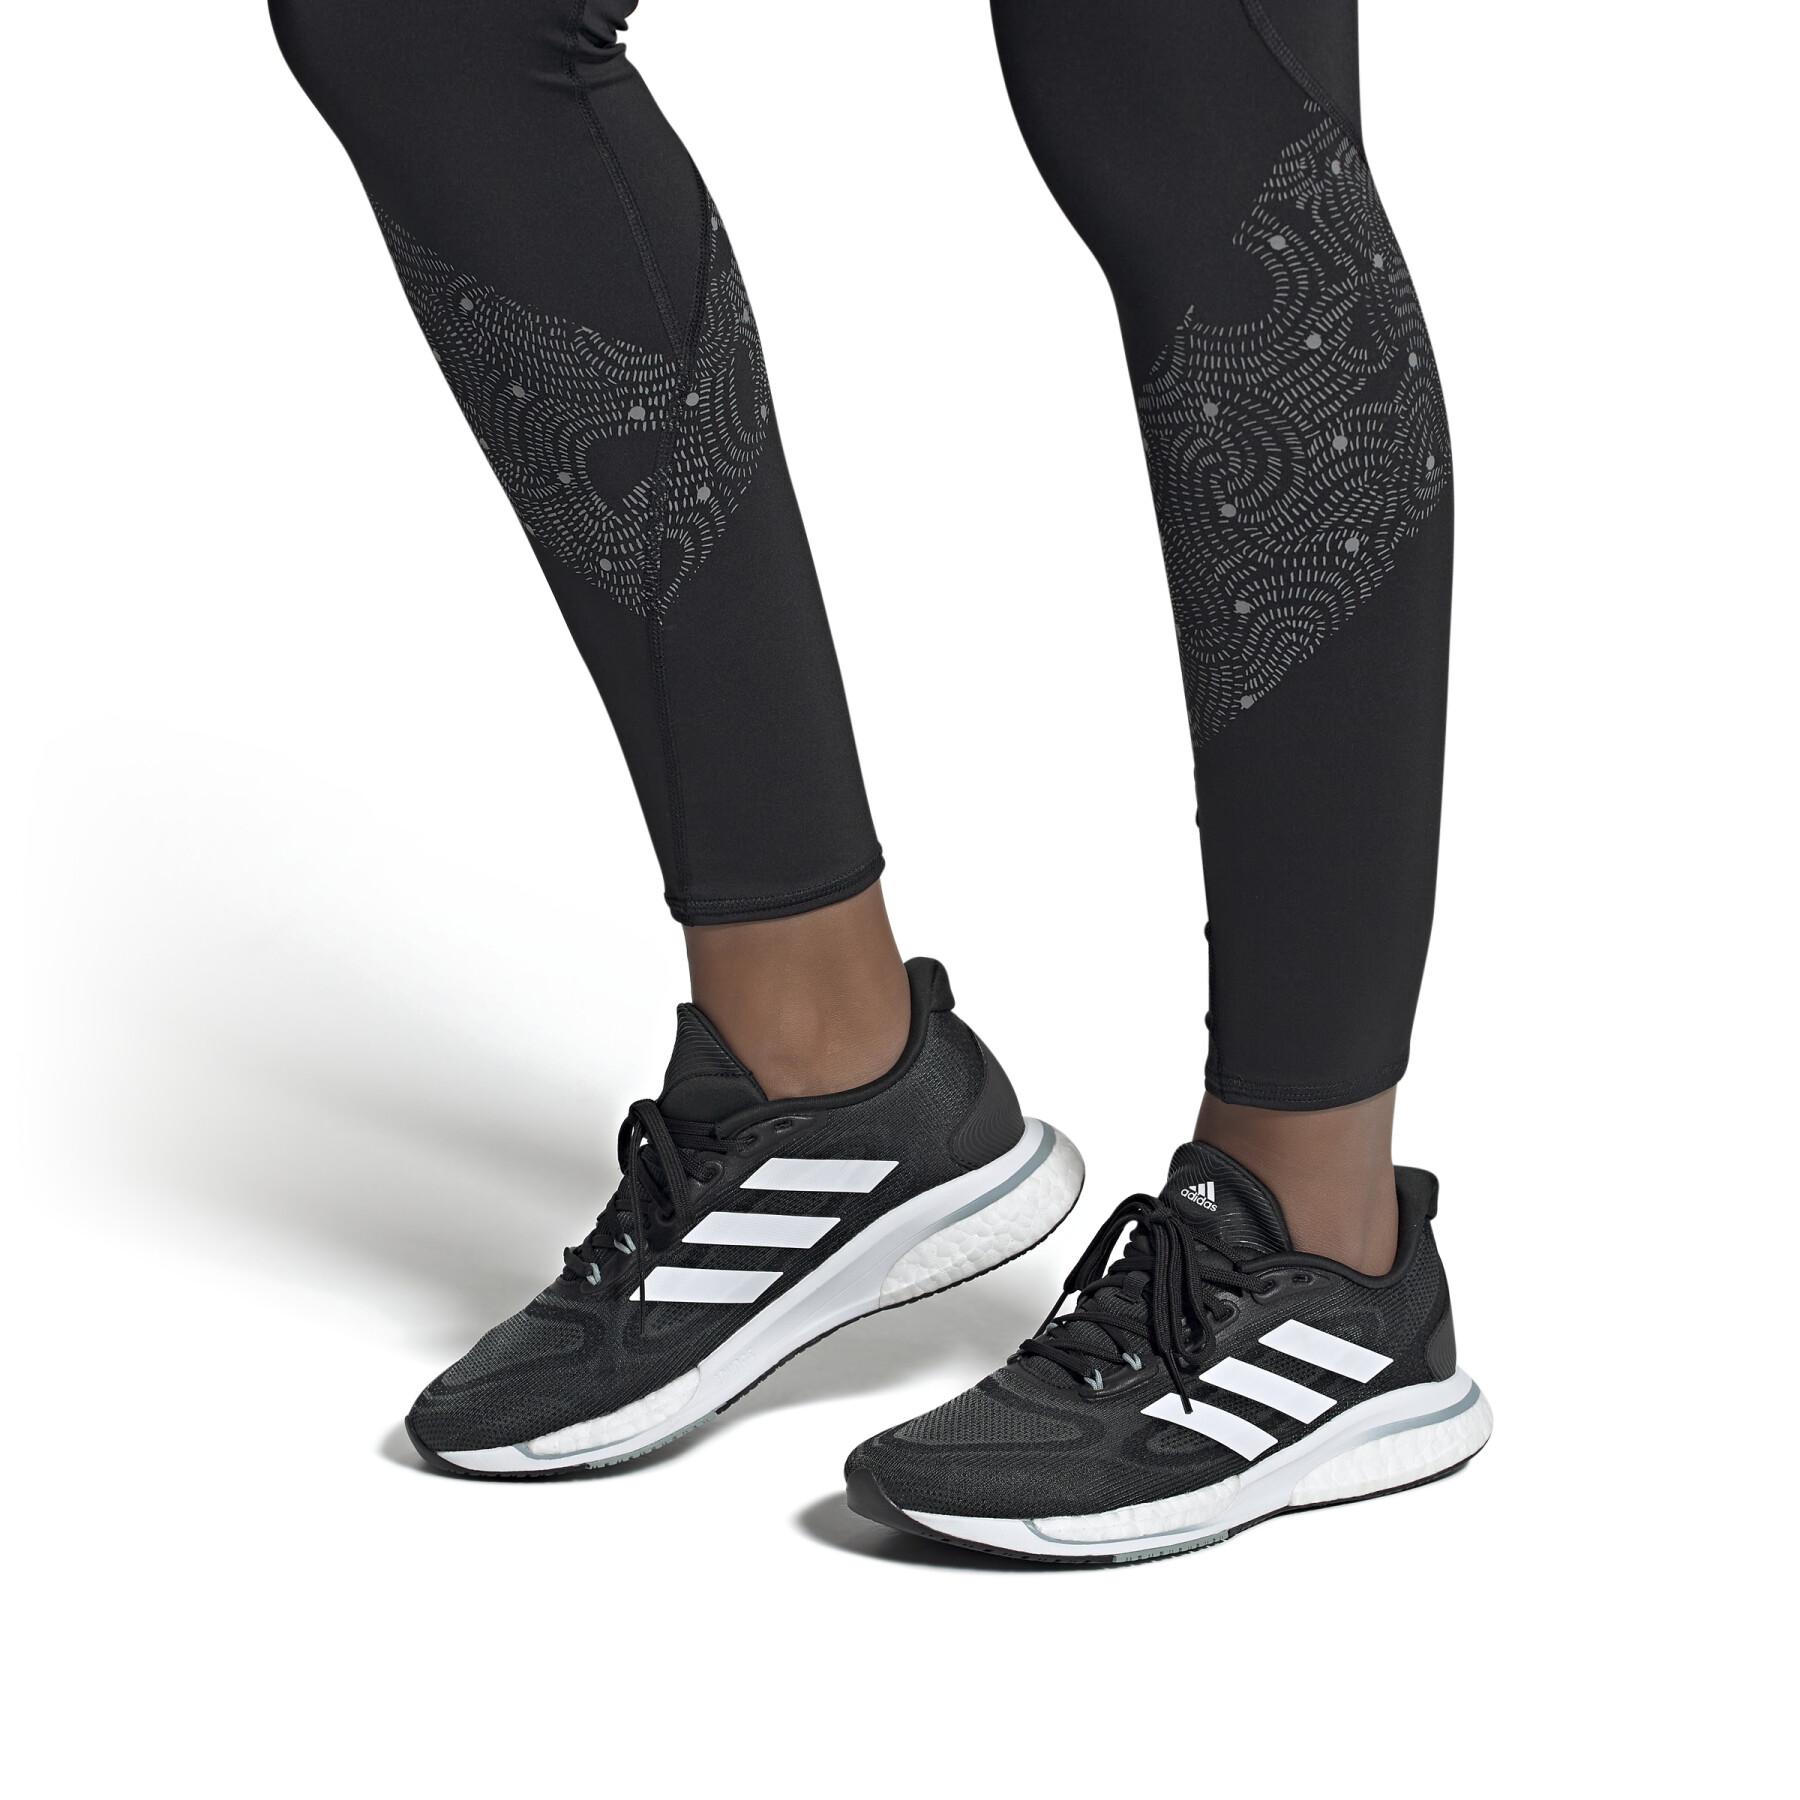 Buty do biegania dla kobiet adidas supernova +